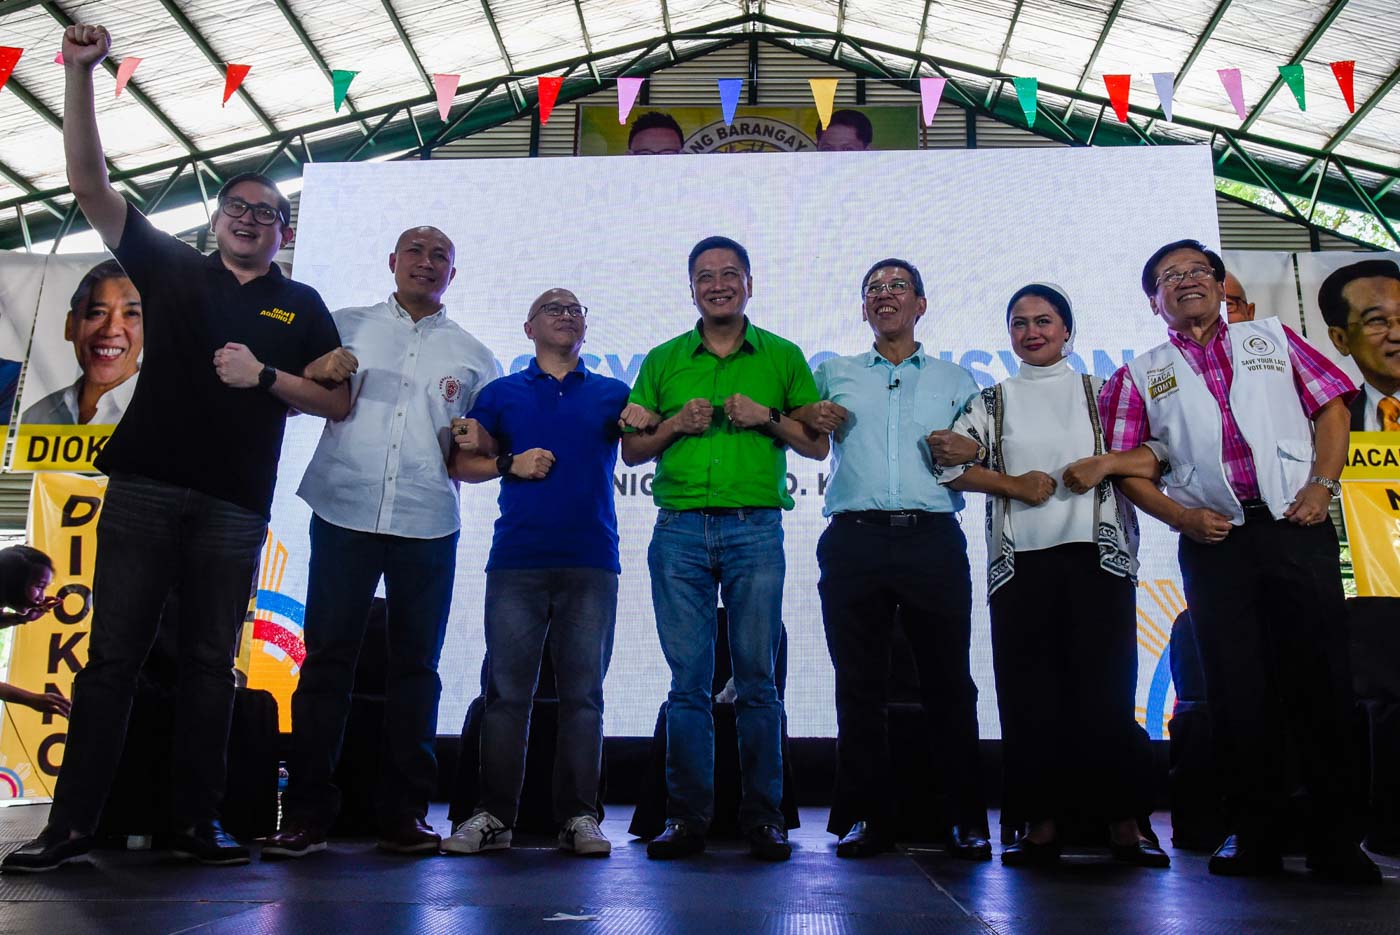 THE CANDIDATES. (From L-R) Senatorial aspirants Bam Aquino, Gary Alejano, Pilo Hikbay, Erin Tañada, Chel Diokno, Samira Gutoc, and Romy Macalintal. Photo by Maria Tan/Rappler 